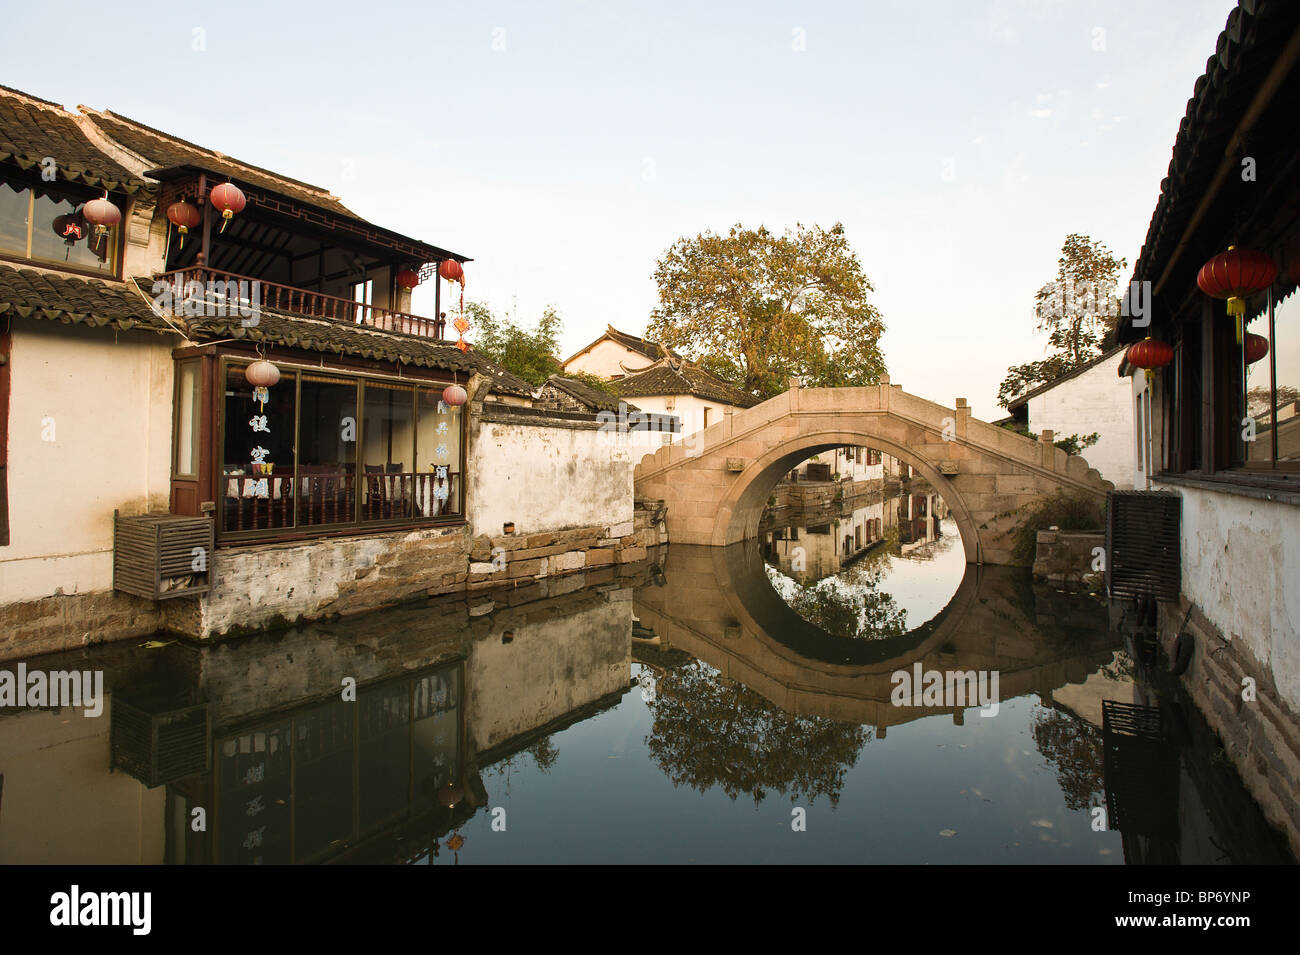 China, Zhouzhuang. Historic Zhouzhuang Water Village Stock Photo - Alamy